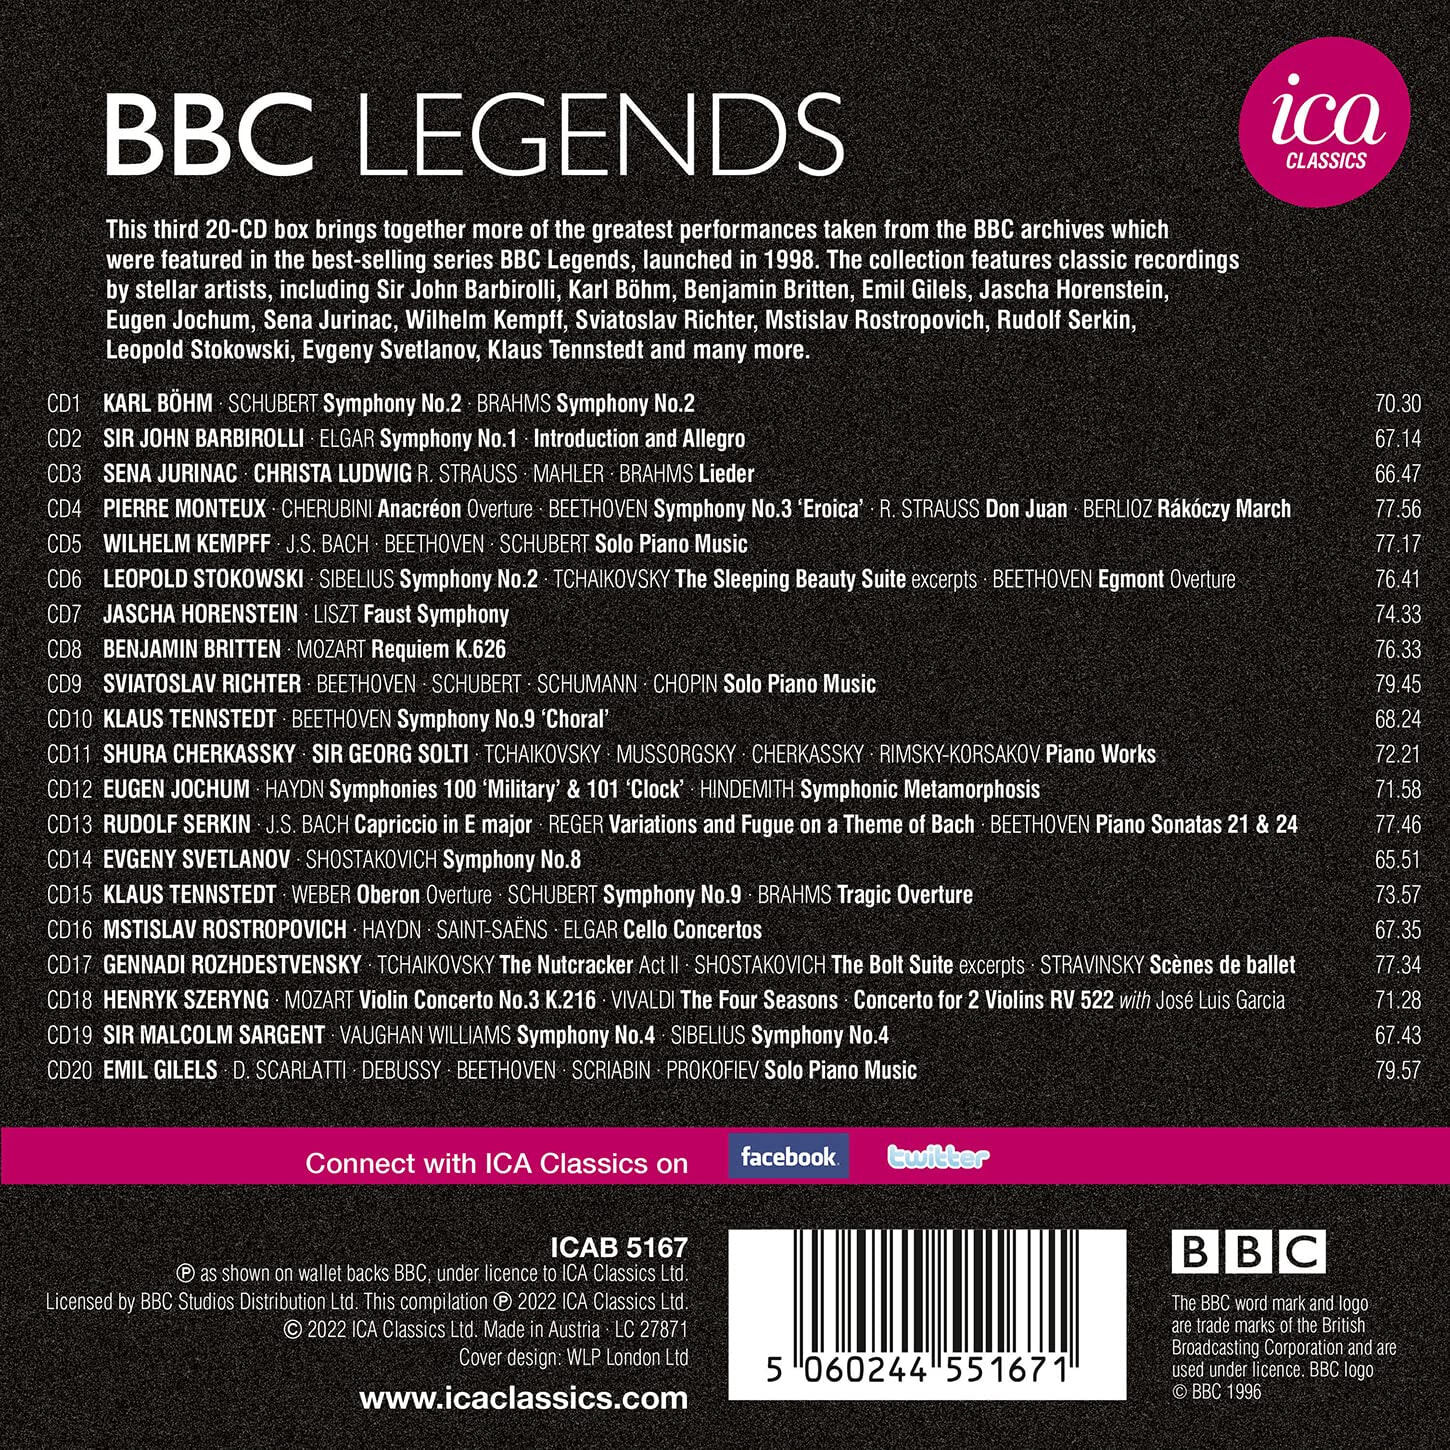 BBC 레전드 그레이트 레코딩스 Vol.3 (BBC Legends Volume 3)